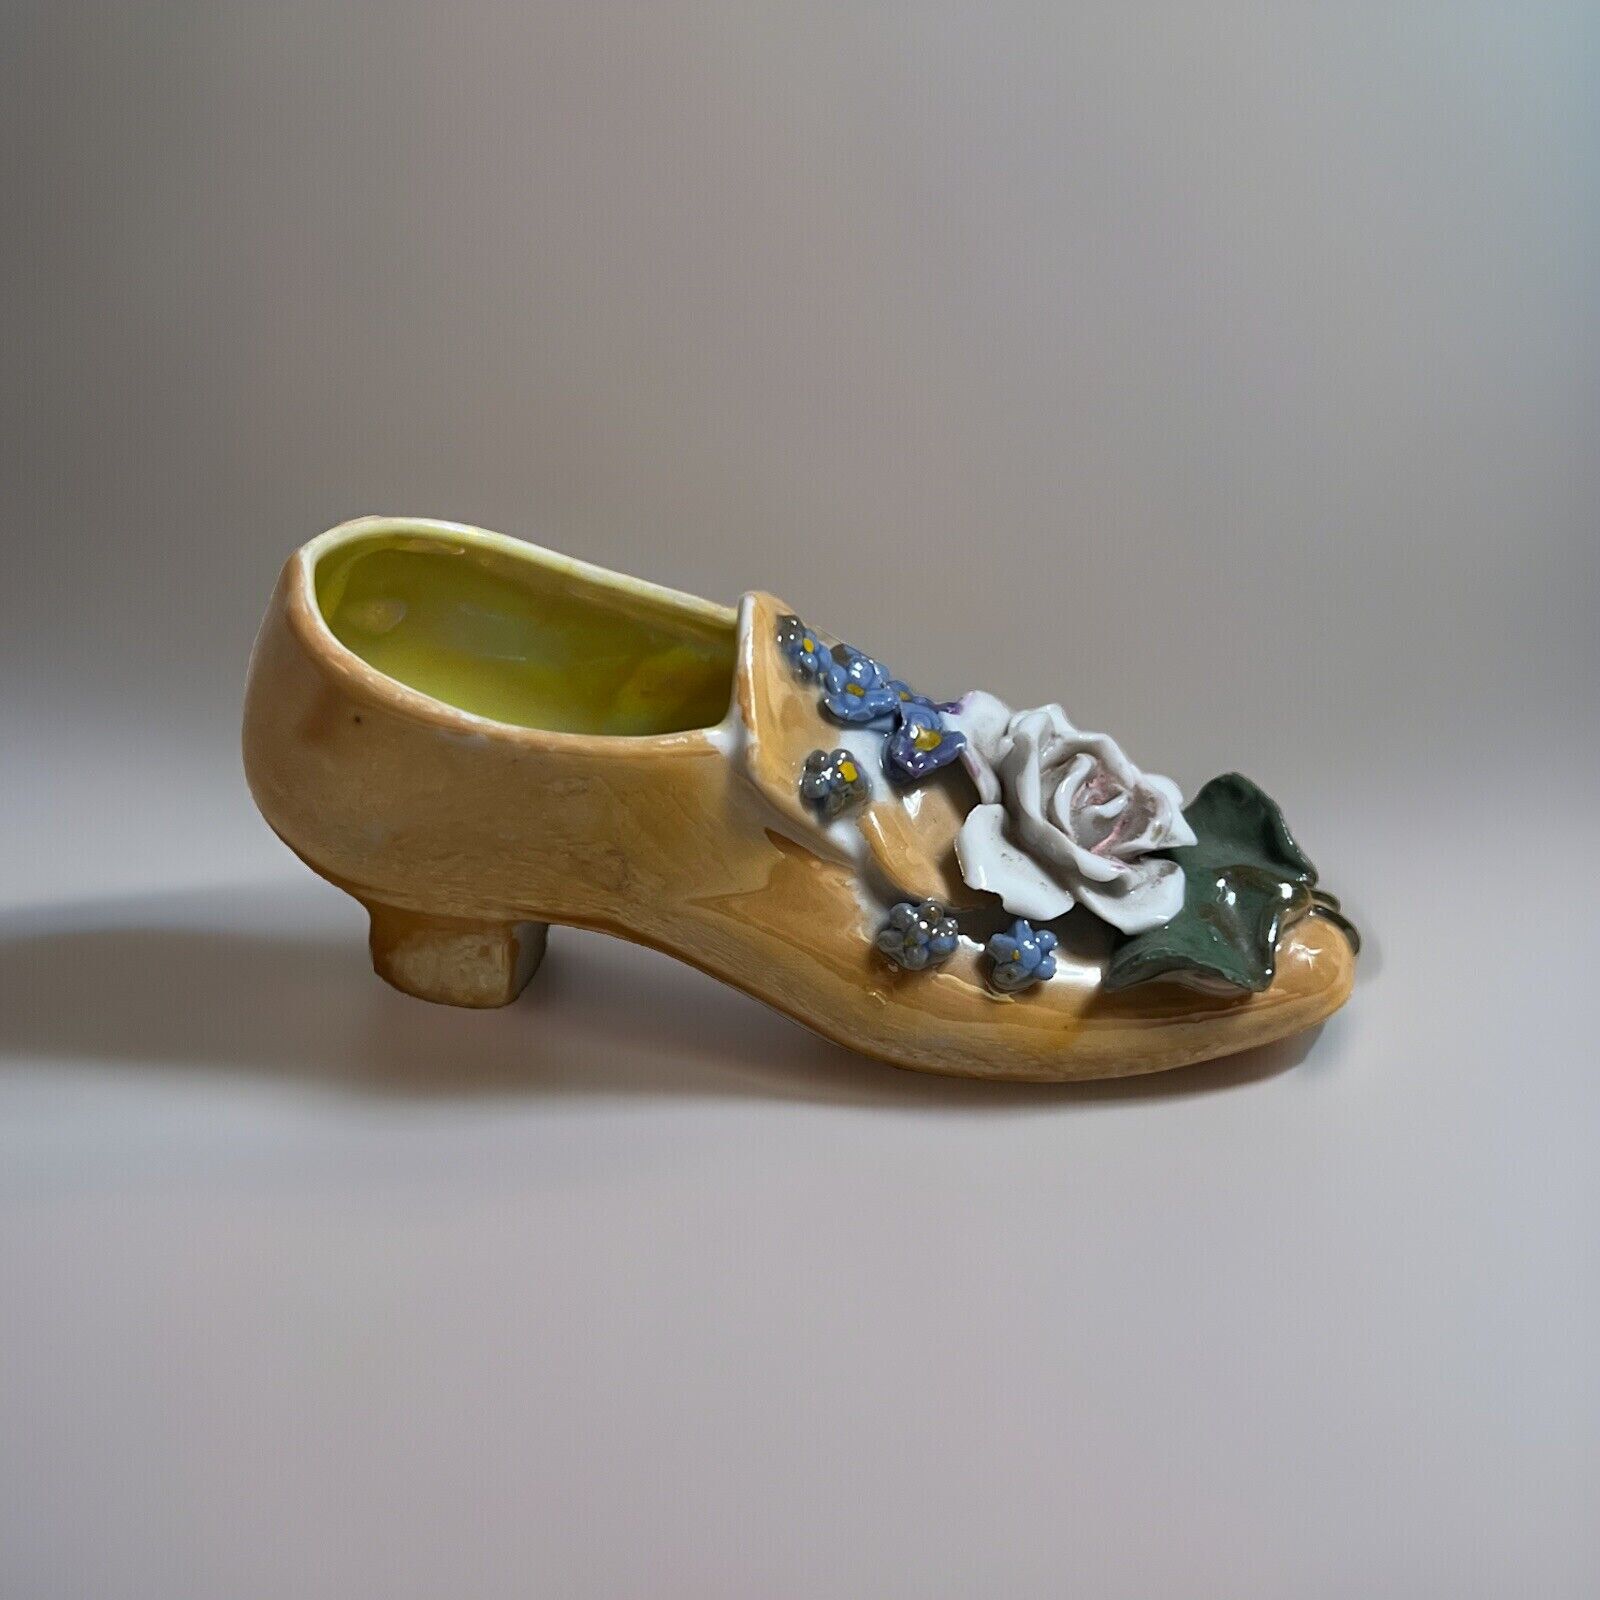 Antique Porcelain Glazed Shoe/Slipper with Floral Accent